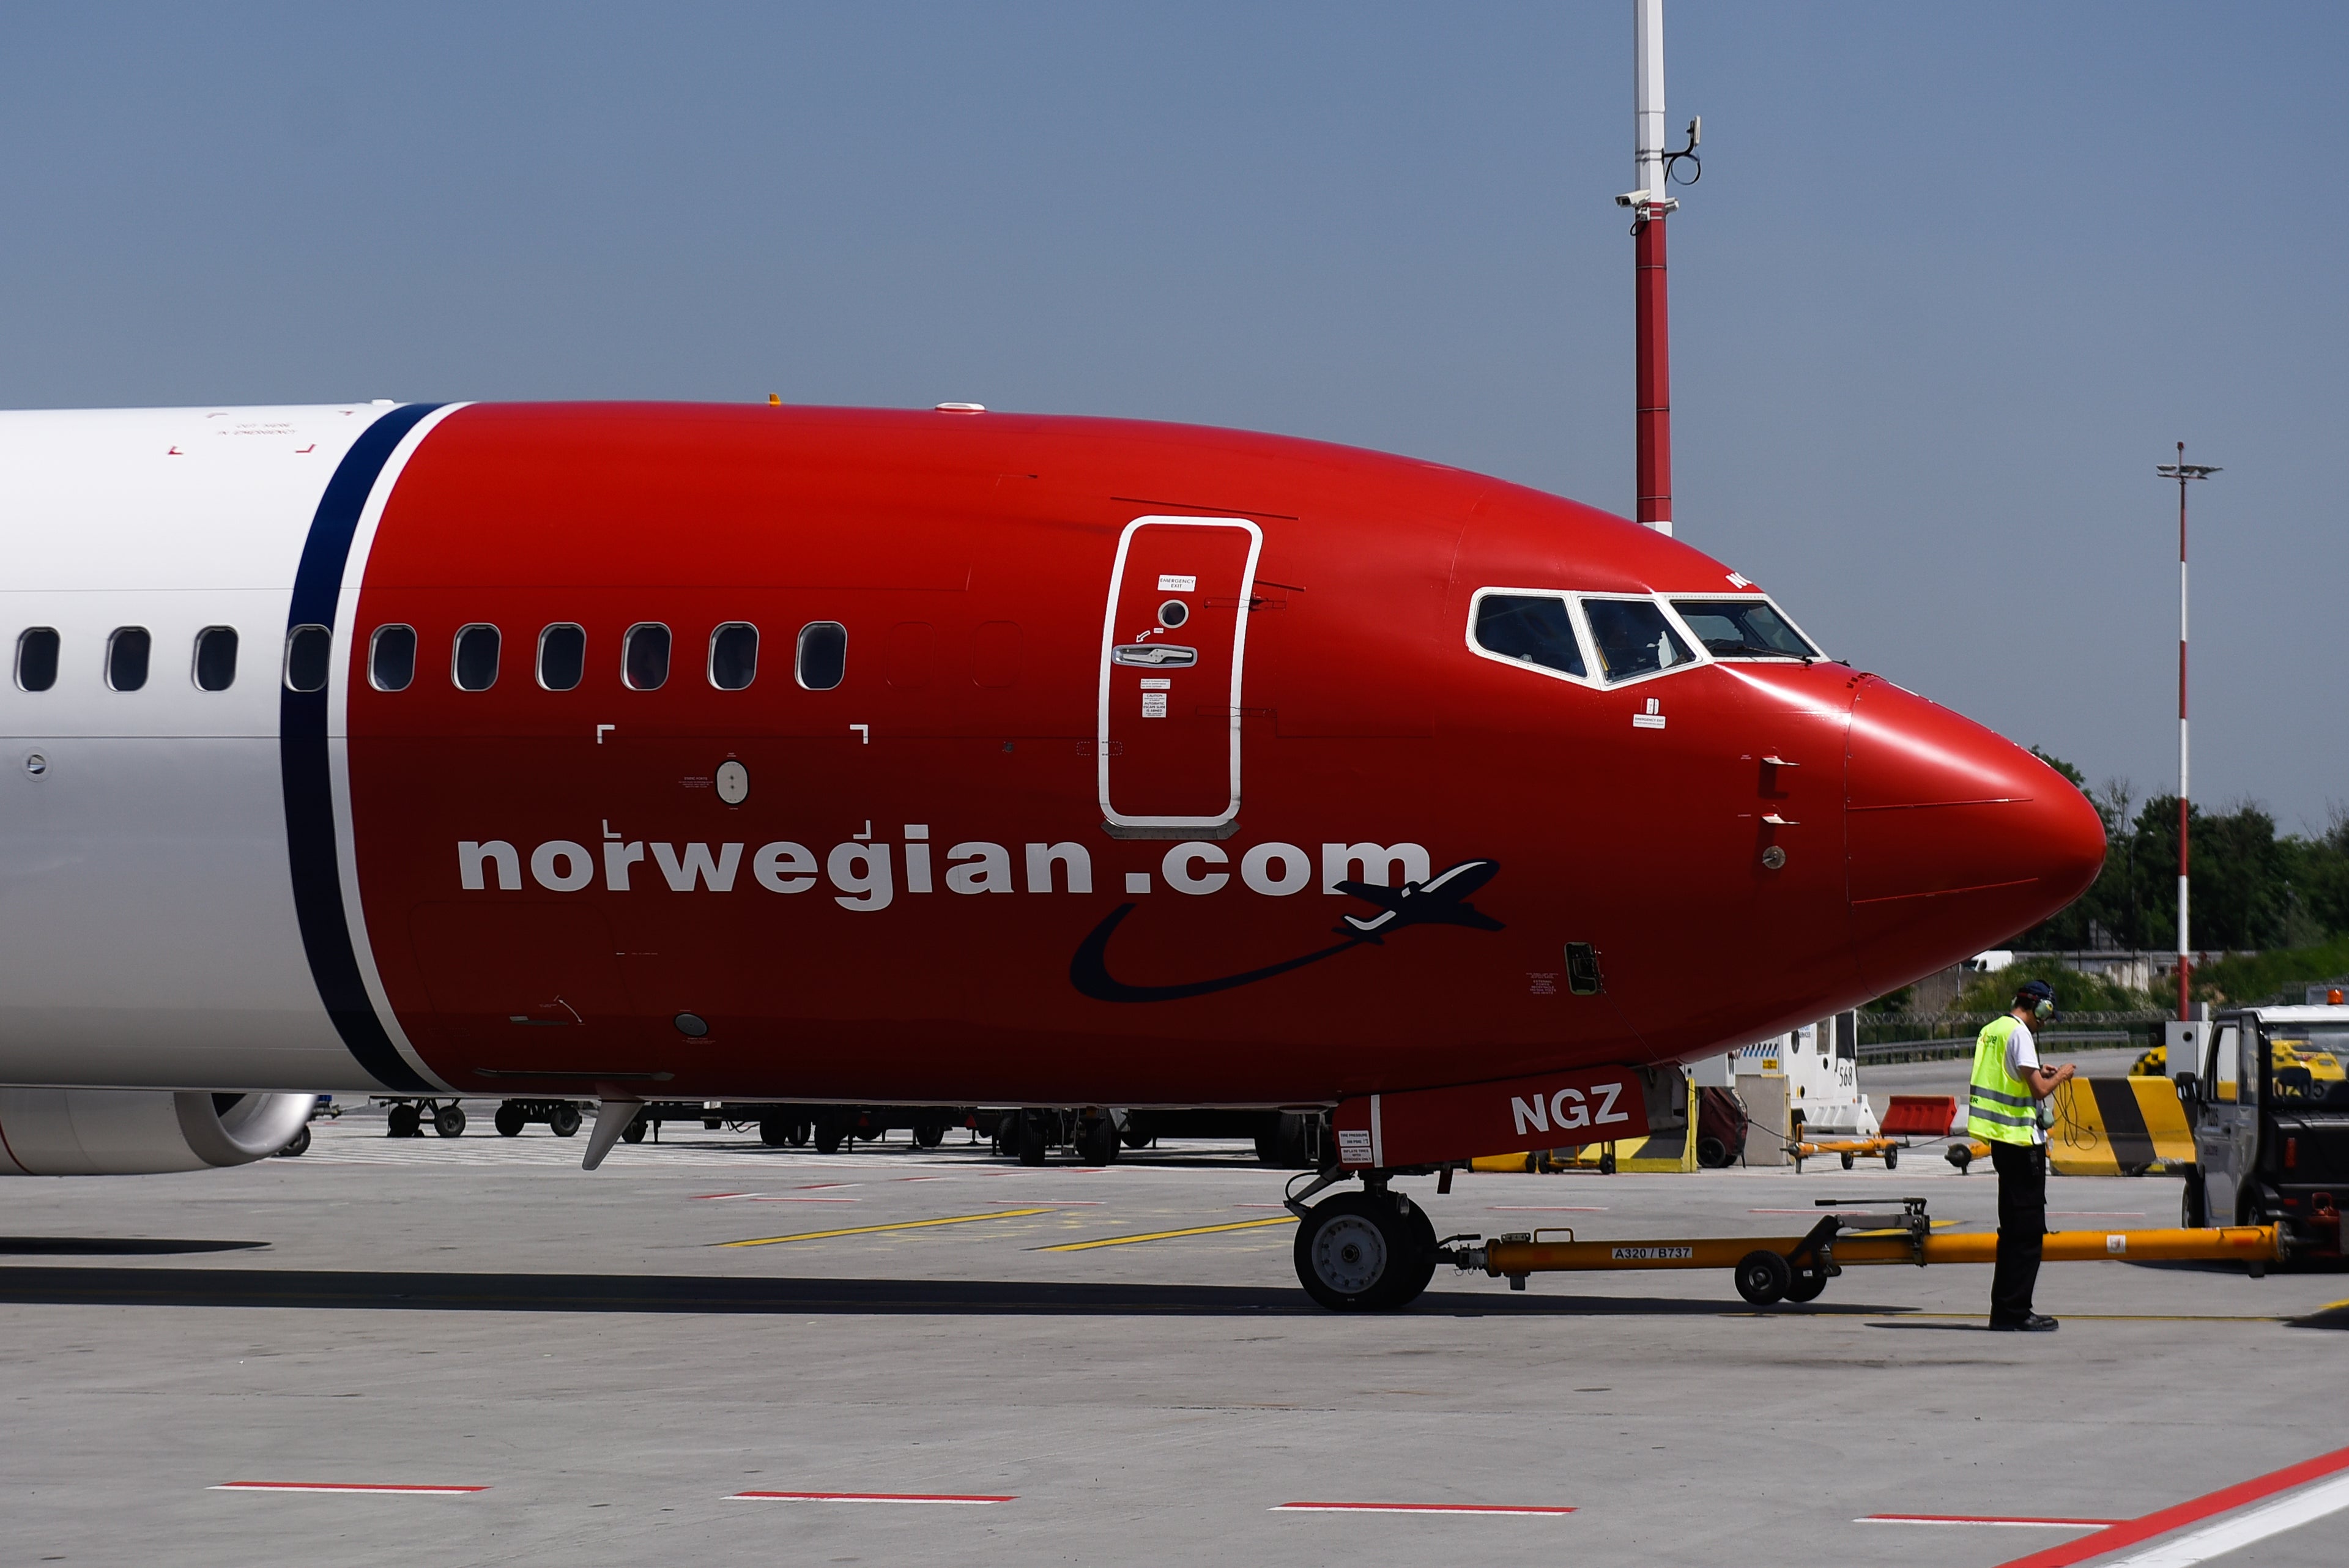 Norwegian Air Boeing 737 Max 8 Aircraft seen at the Krakow